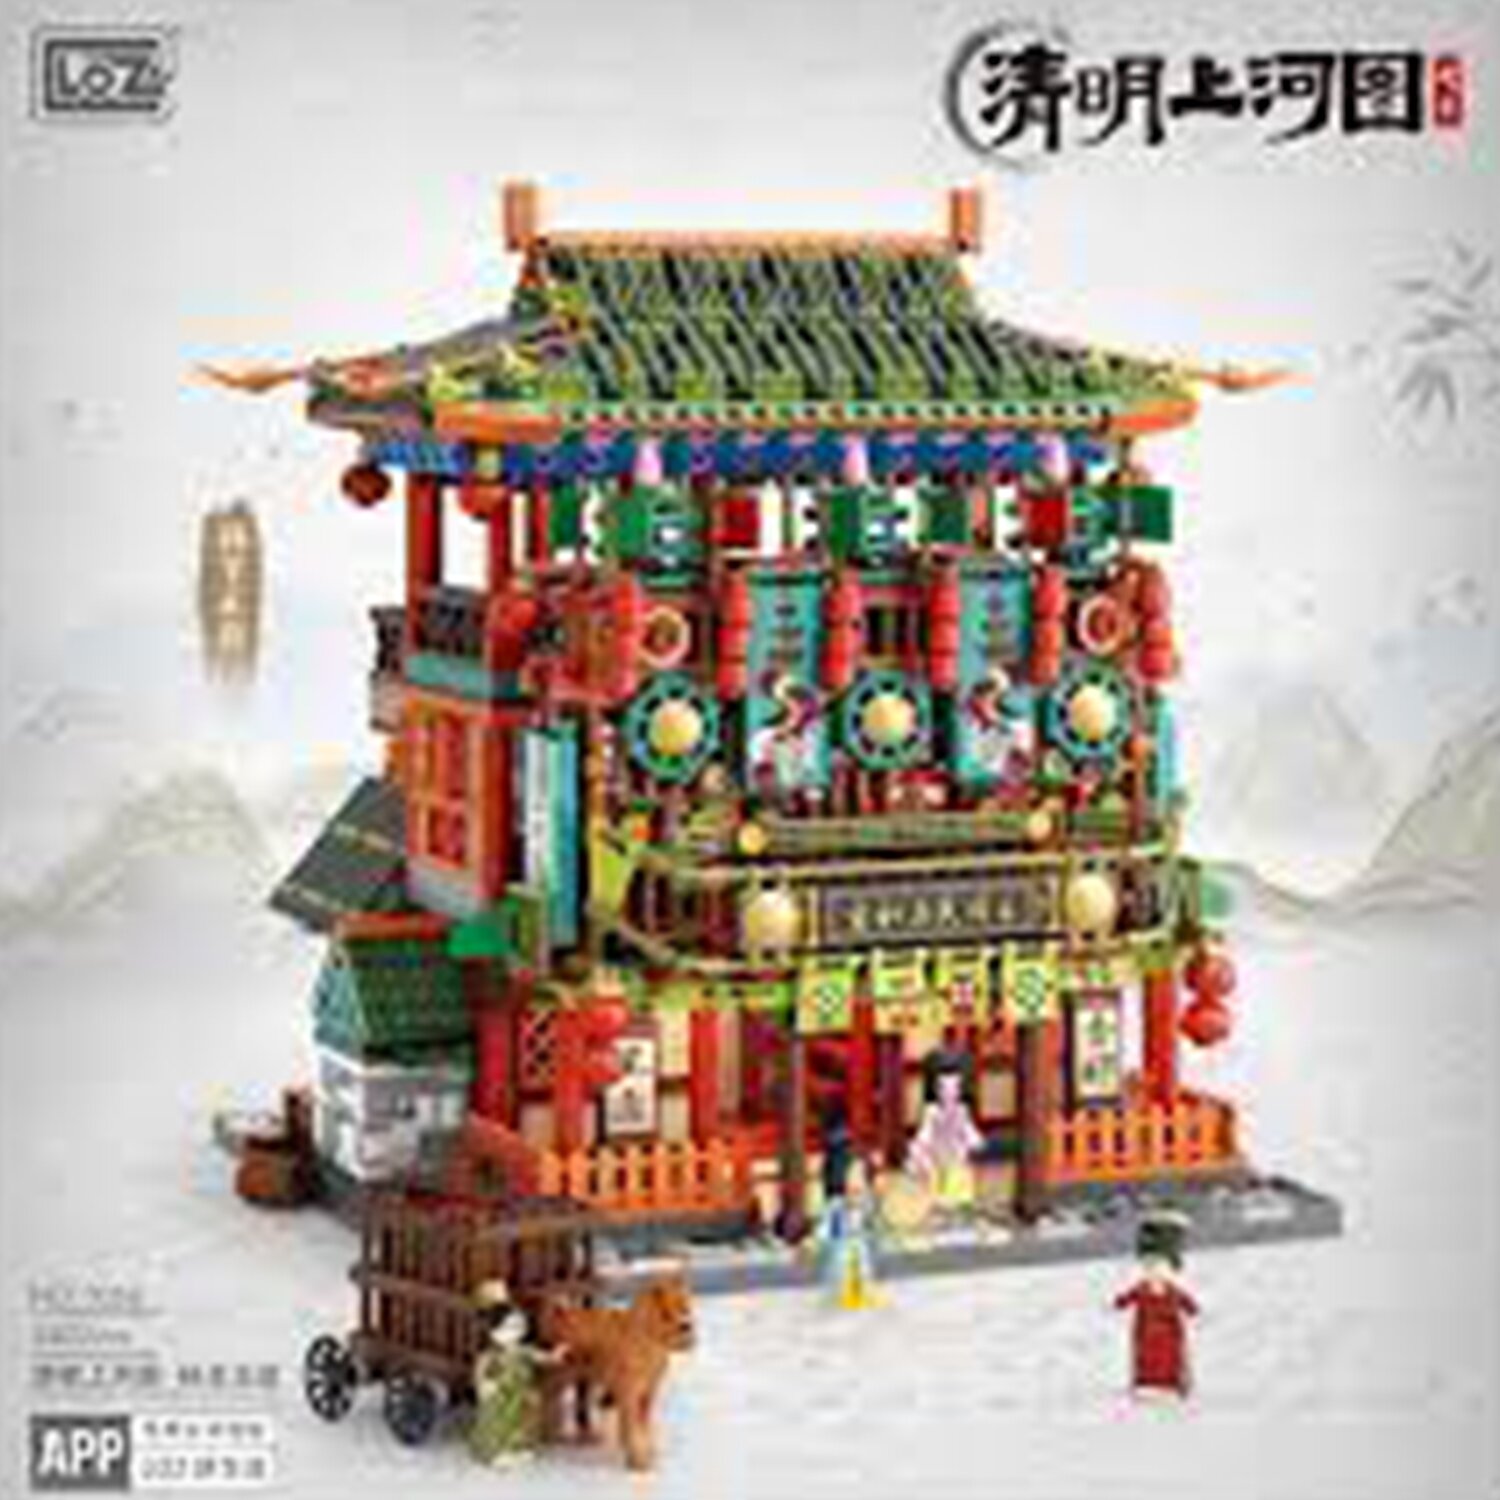 LOZ Mini Blocks - Qingming Shanghe Map - Sun Yangzheng Building Bricks Set  40 x 28 x 9.5cm